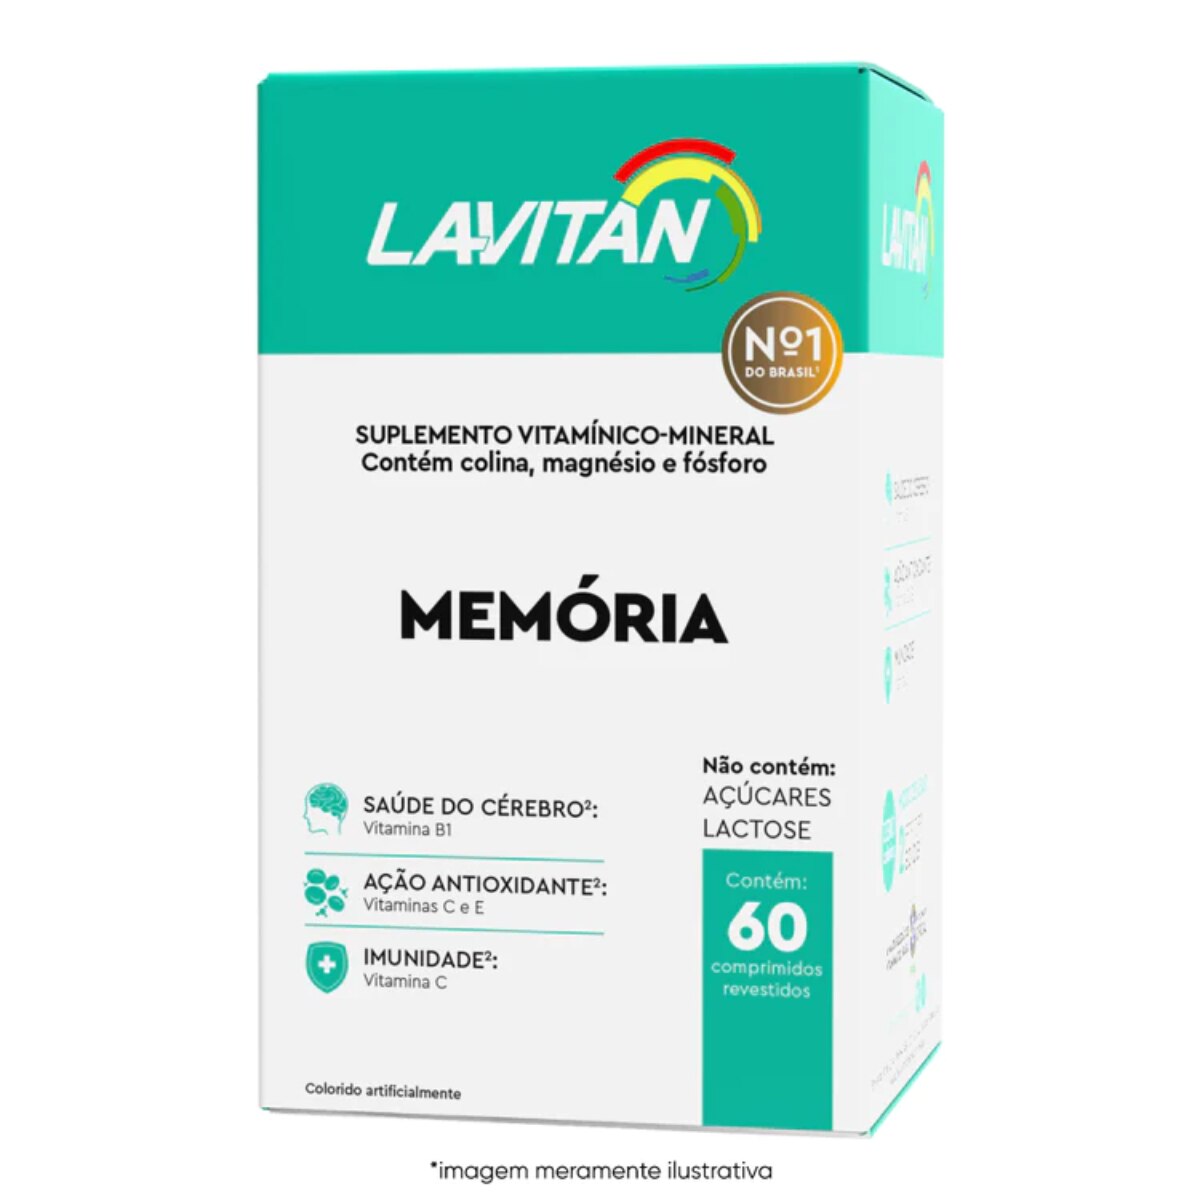 Lavitan Memoria 60 Comprimidos Revestidos